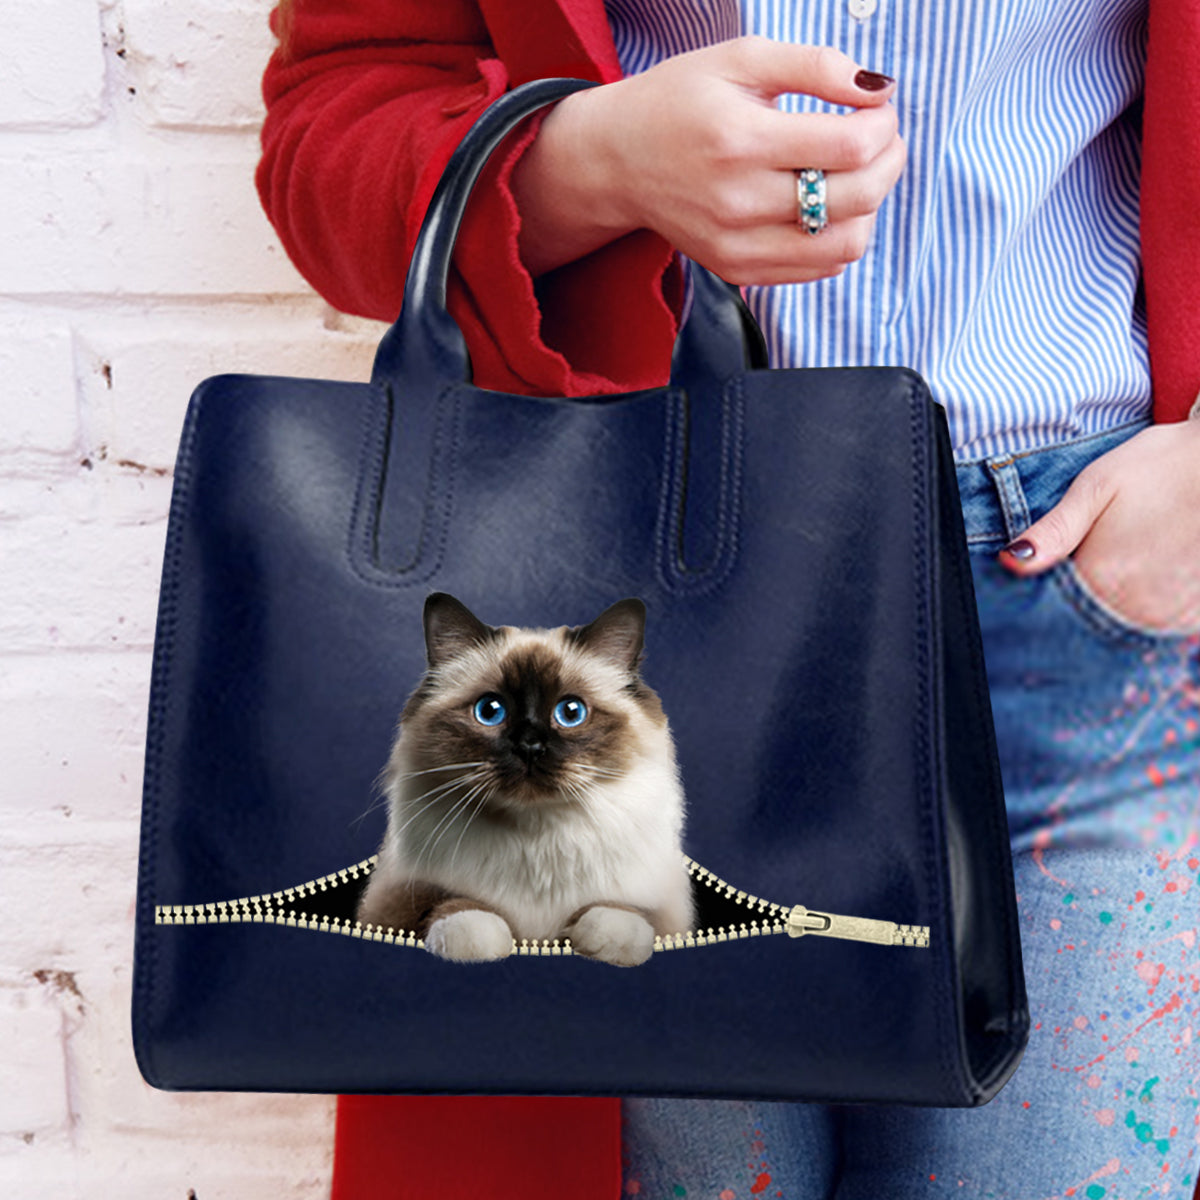 Reduce Stress At Work With Birman Cat - Luxury Handbag V1